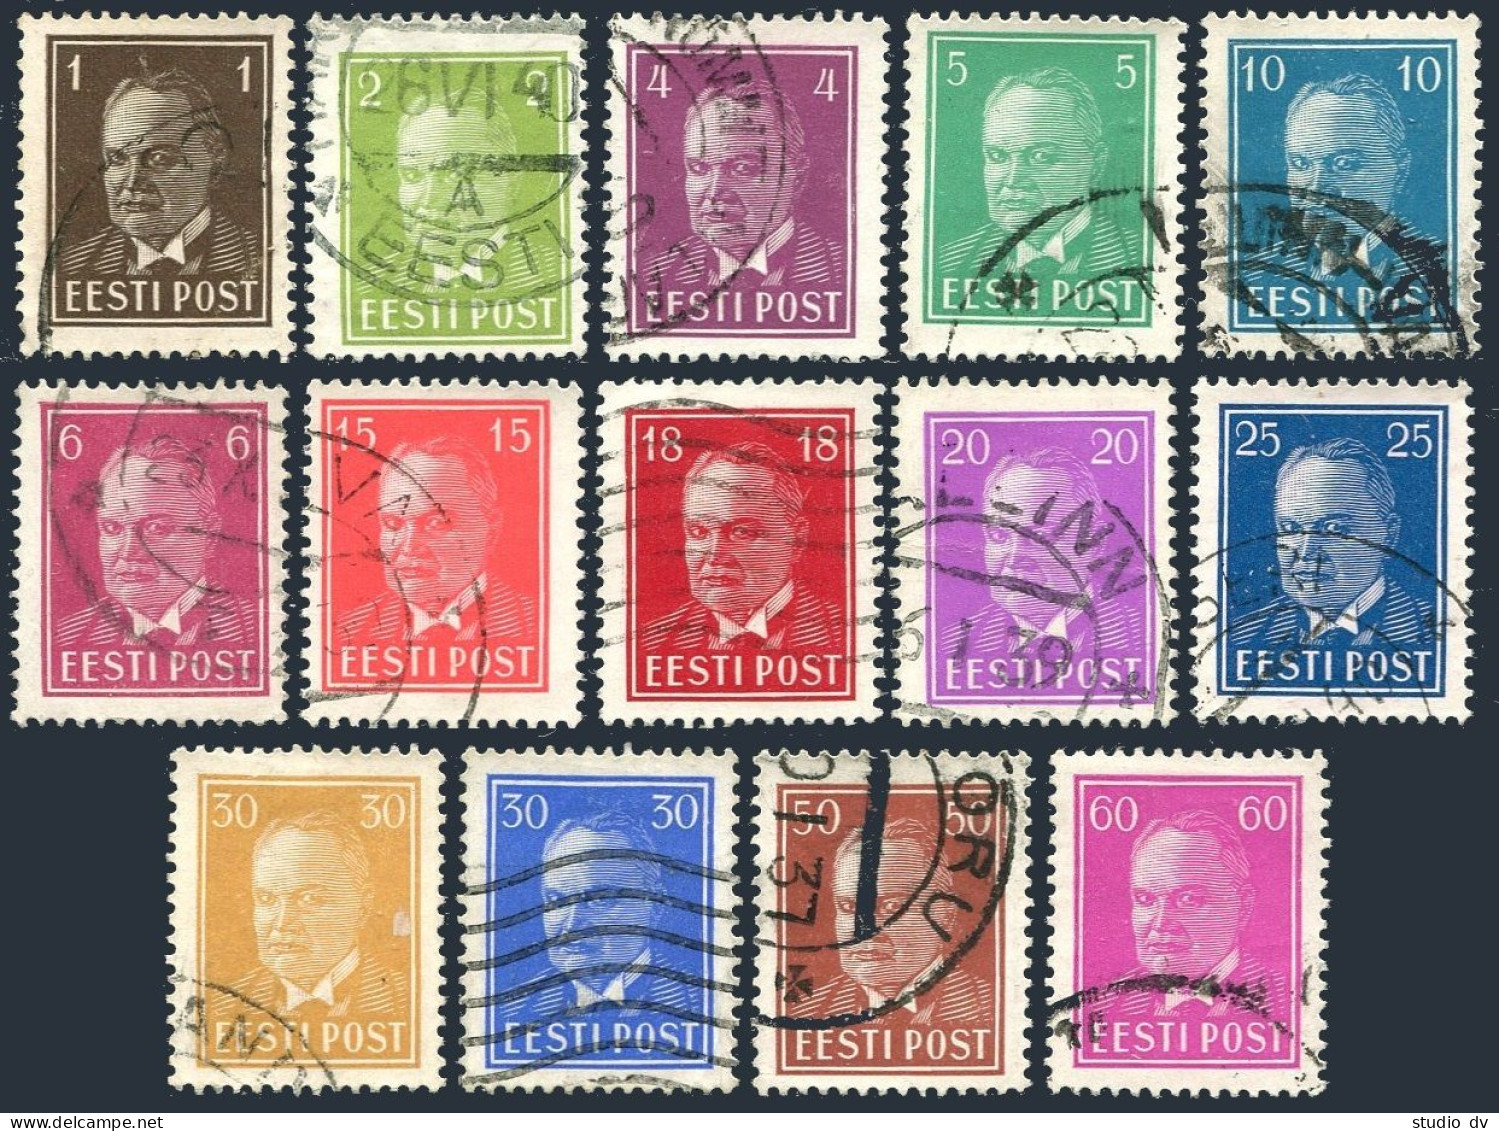 Estonia 117/133 14 Stamps,used.Mi 113/158. President Konstantin Pats,1936-1940. - Estonia